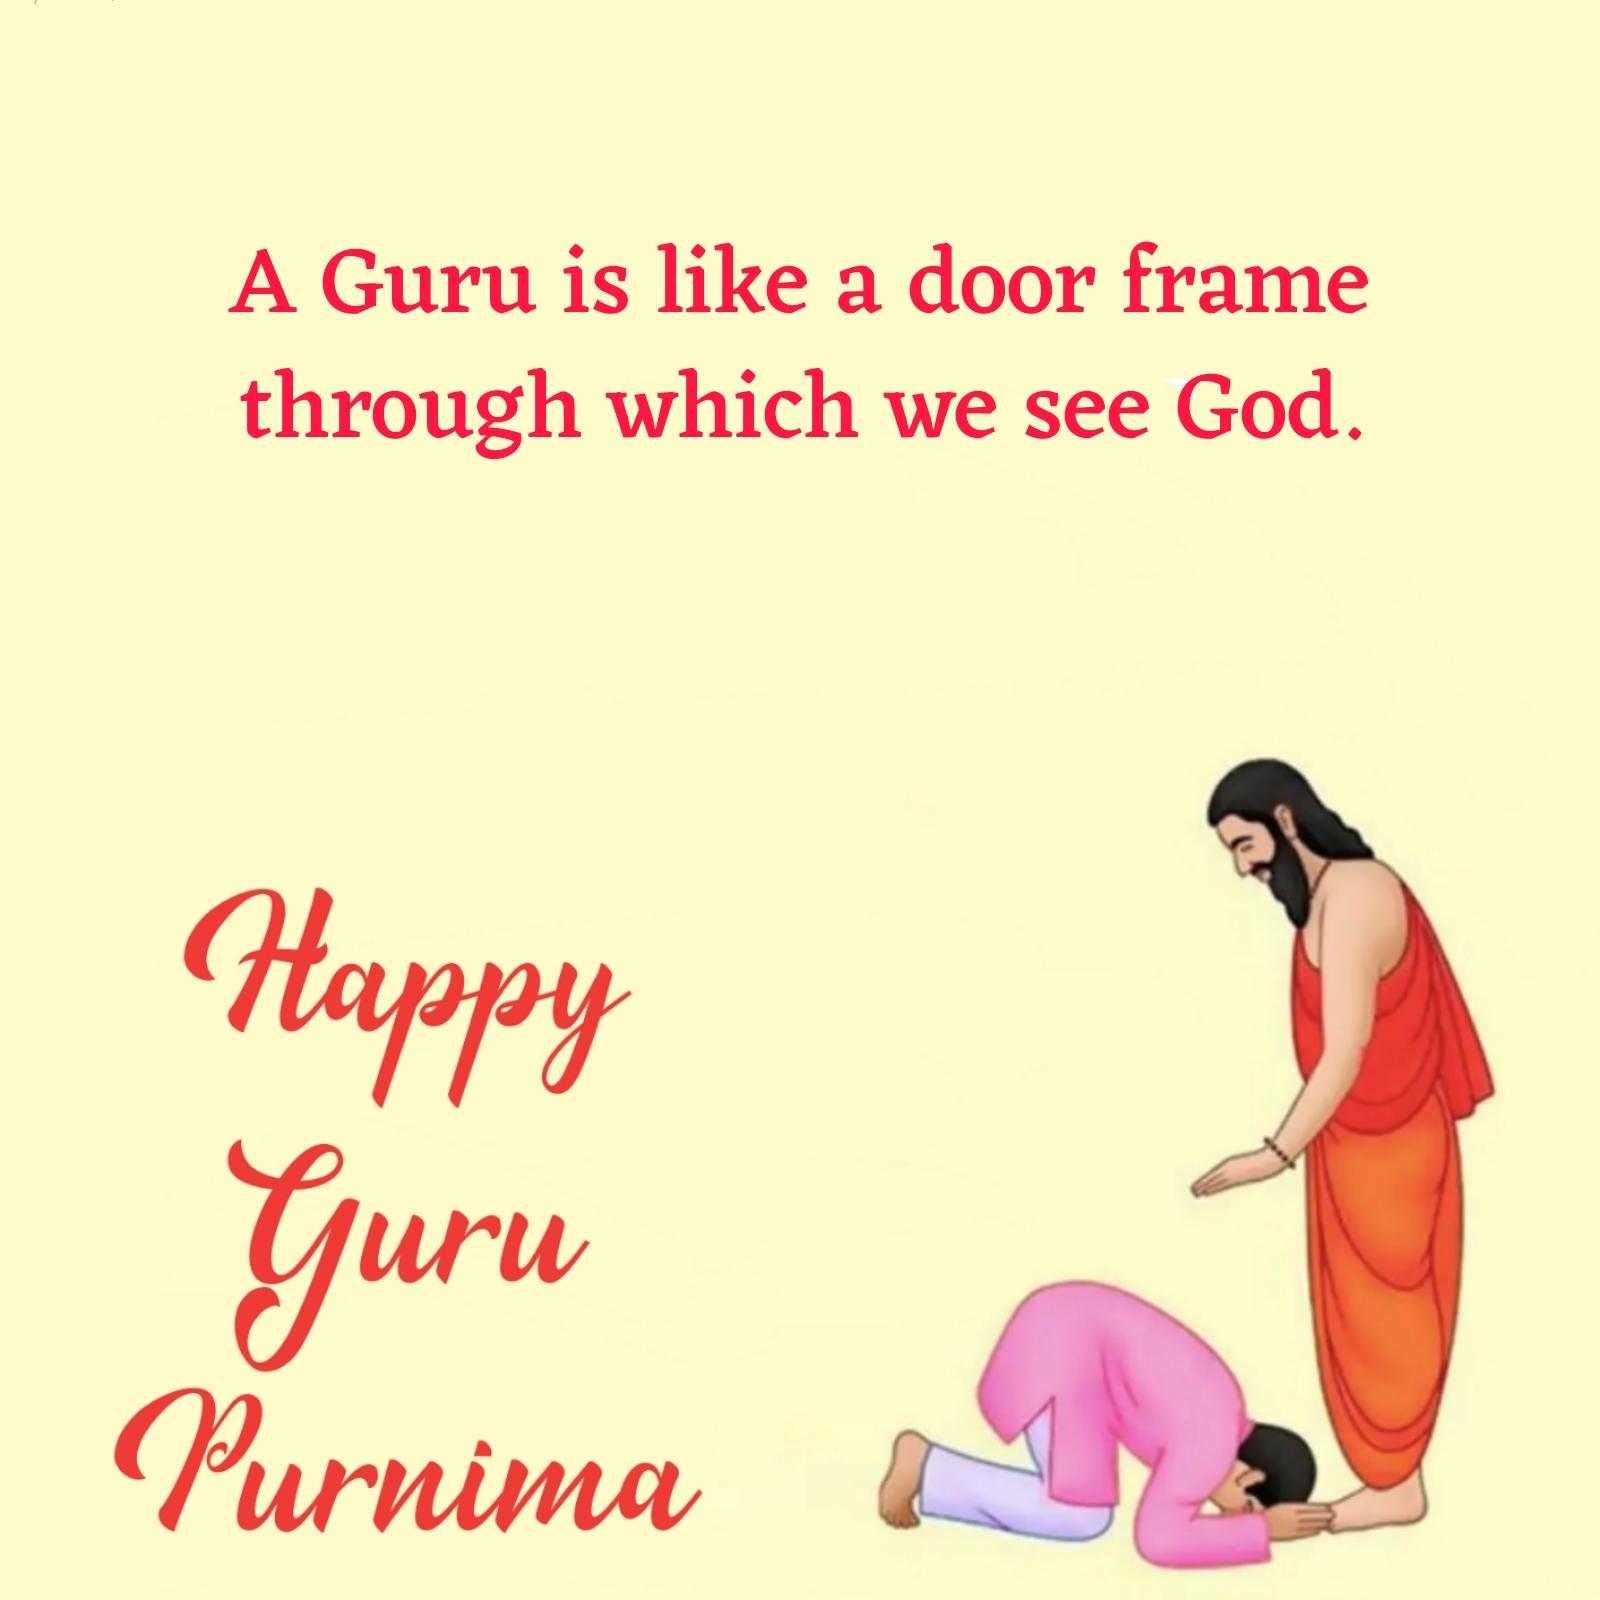 A Guru is like a door frame through which we see God